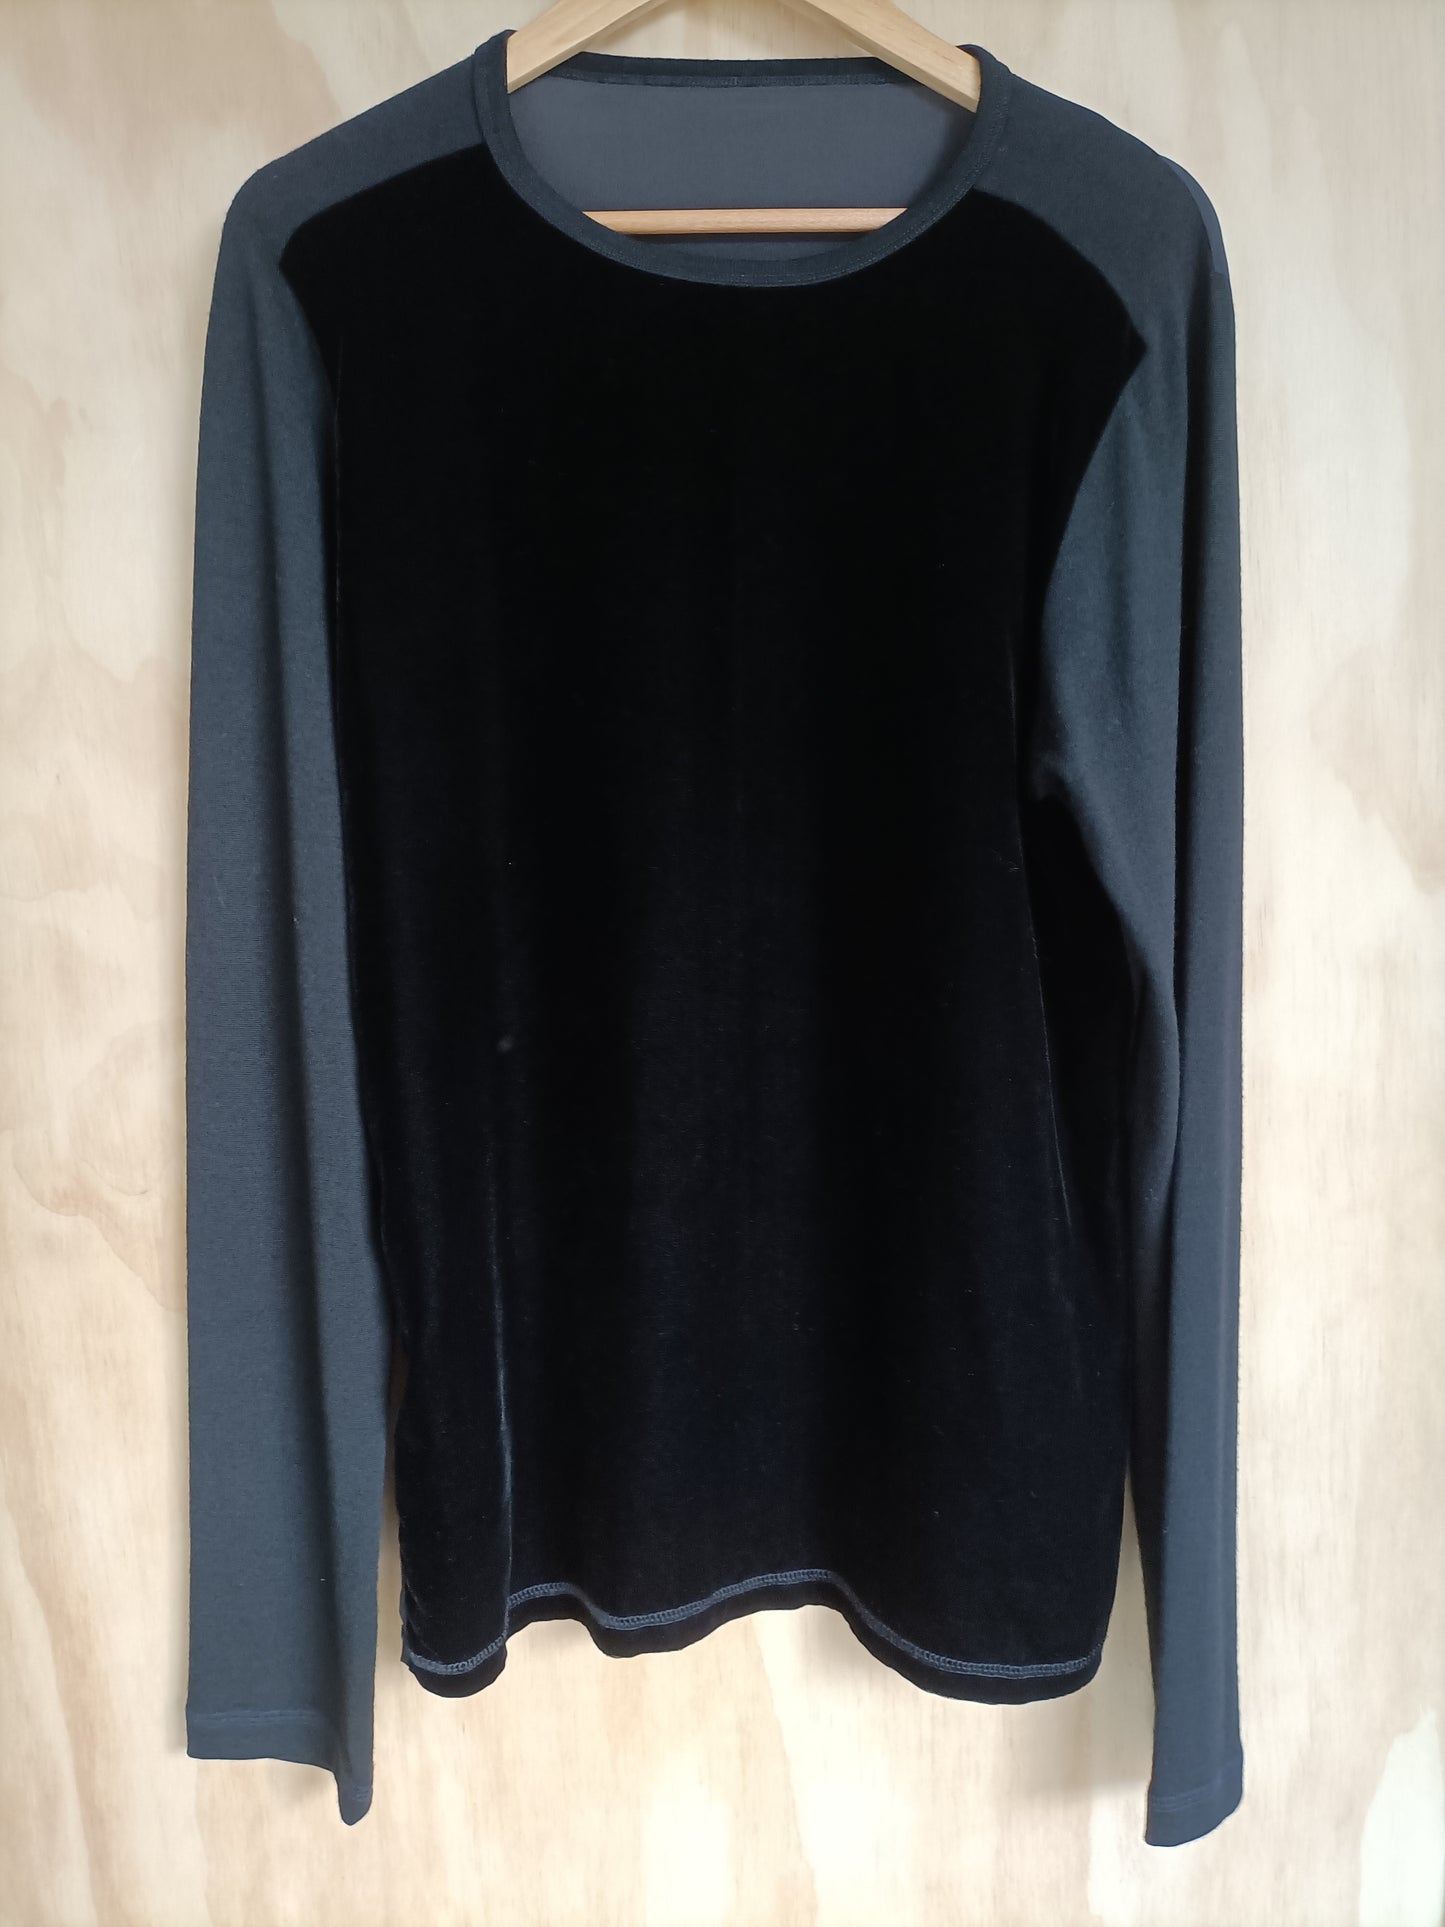 Zambesi - Black Velvet & Silk Long Sleeve Top - Size 1